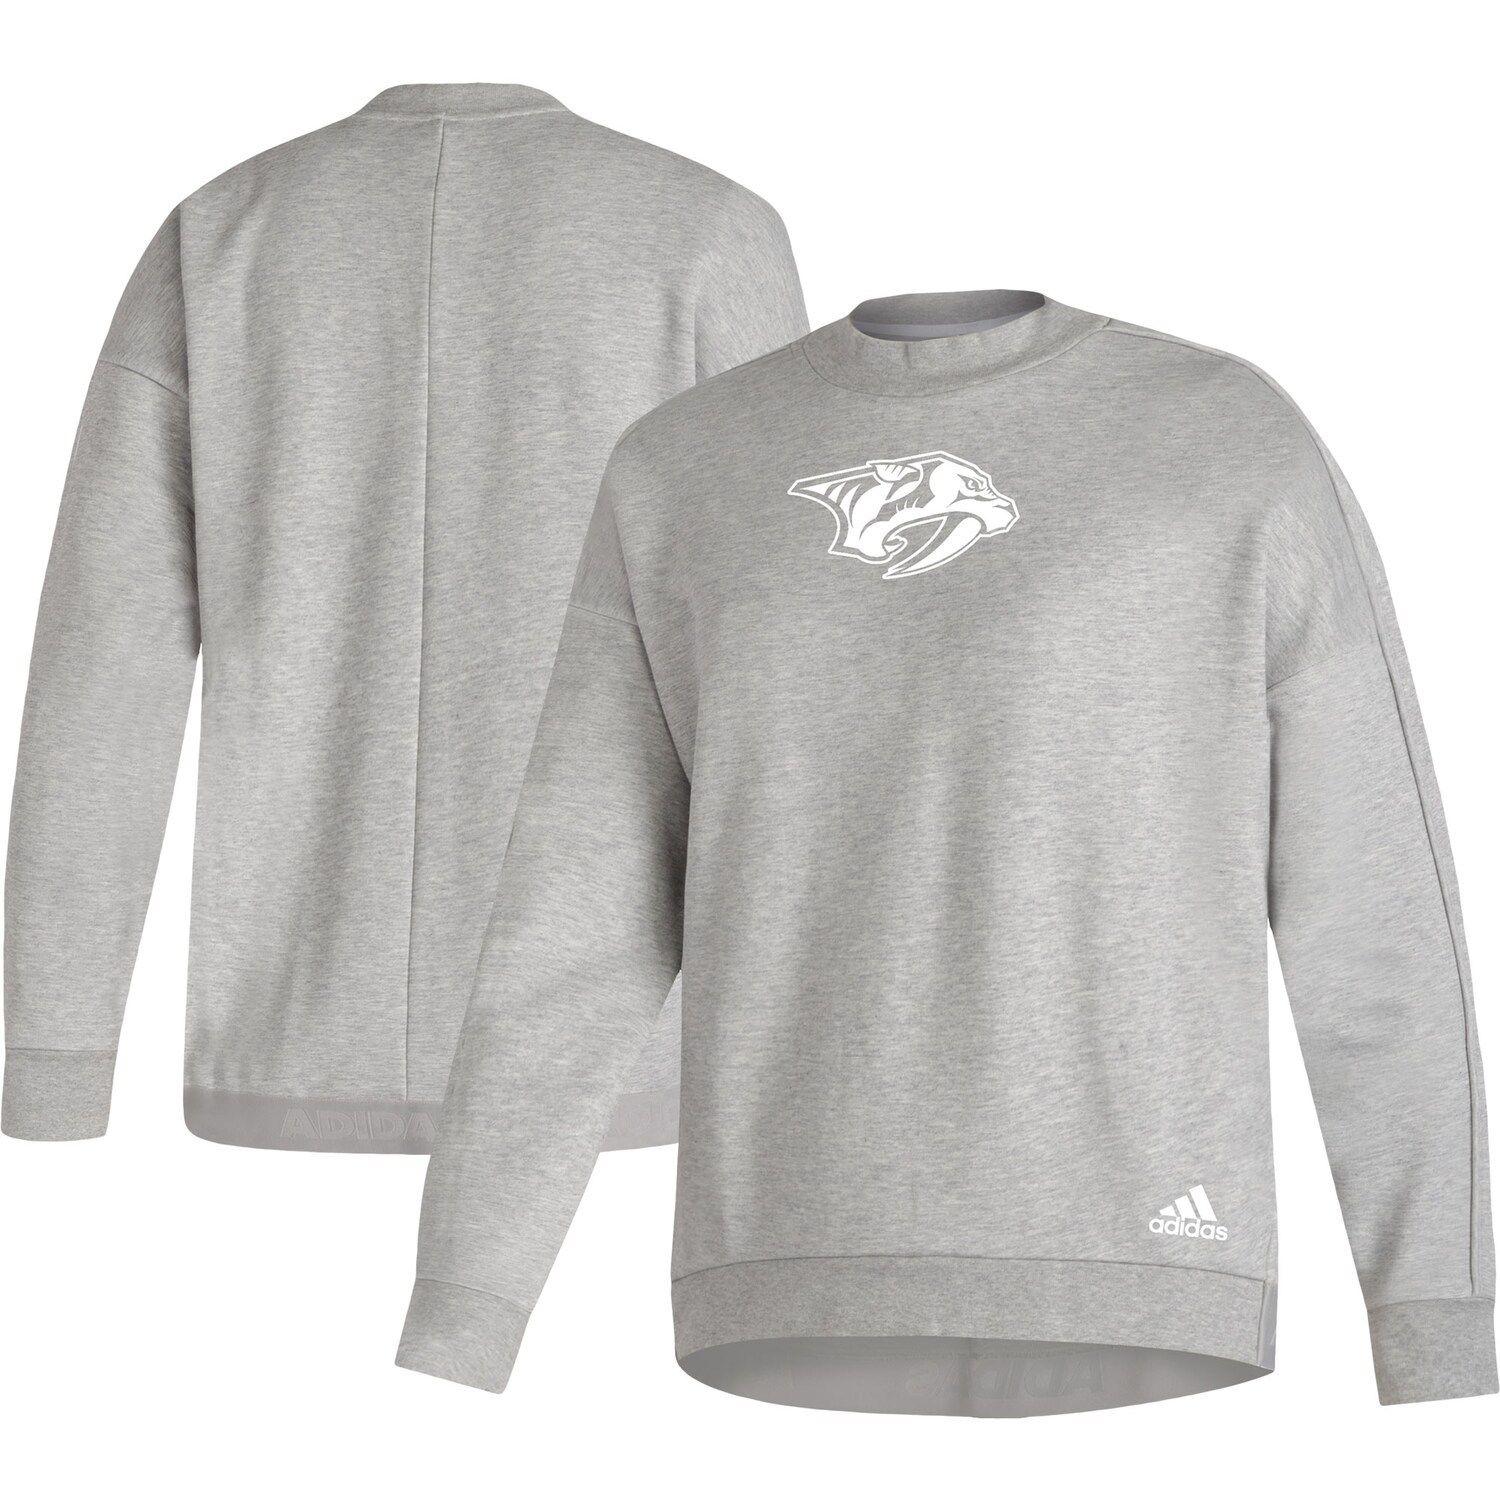 gray adidas sweater